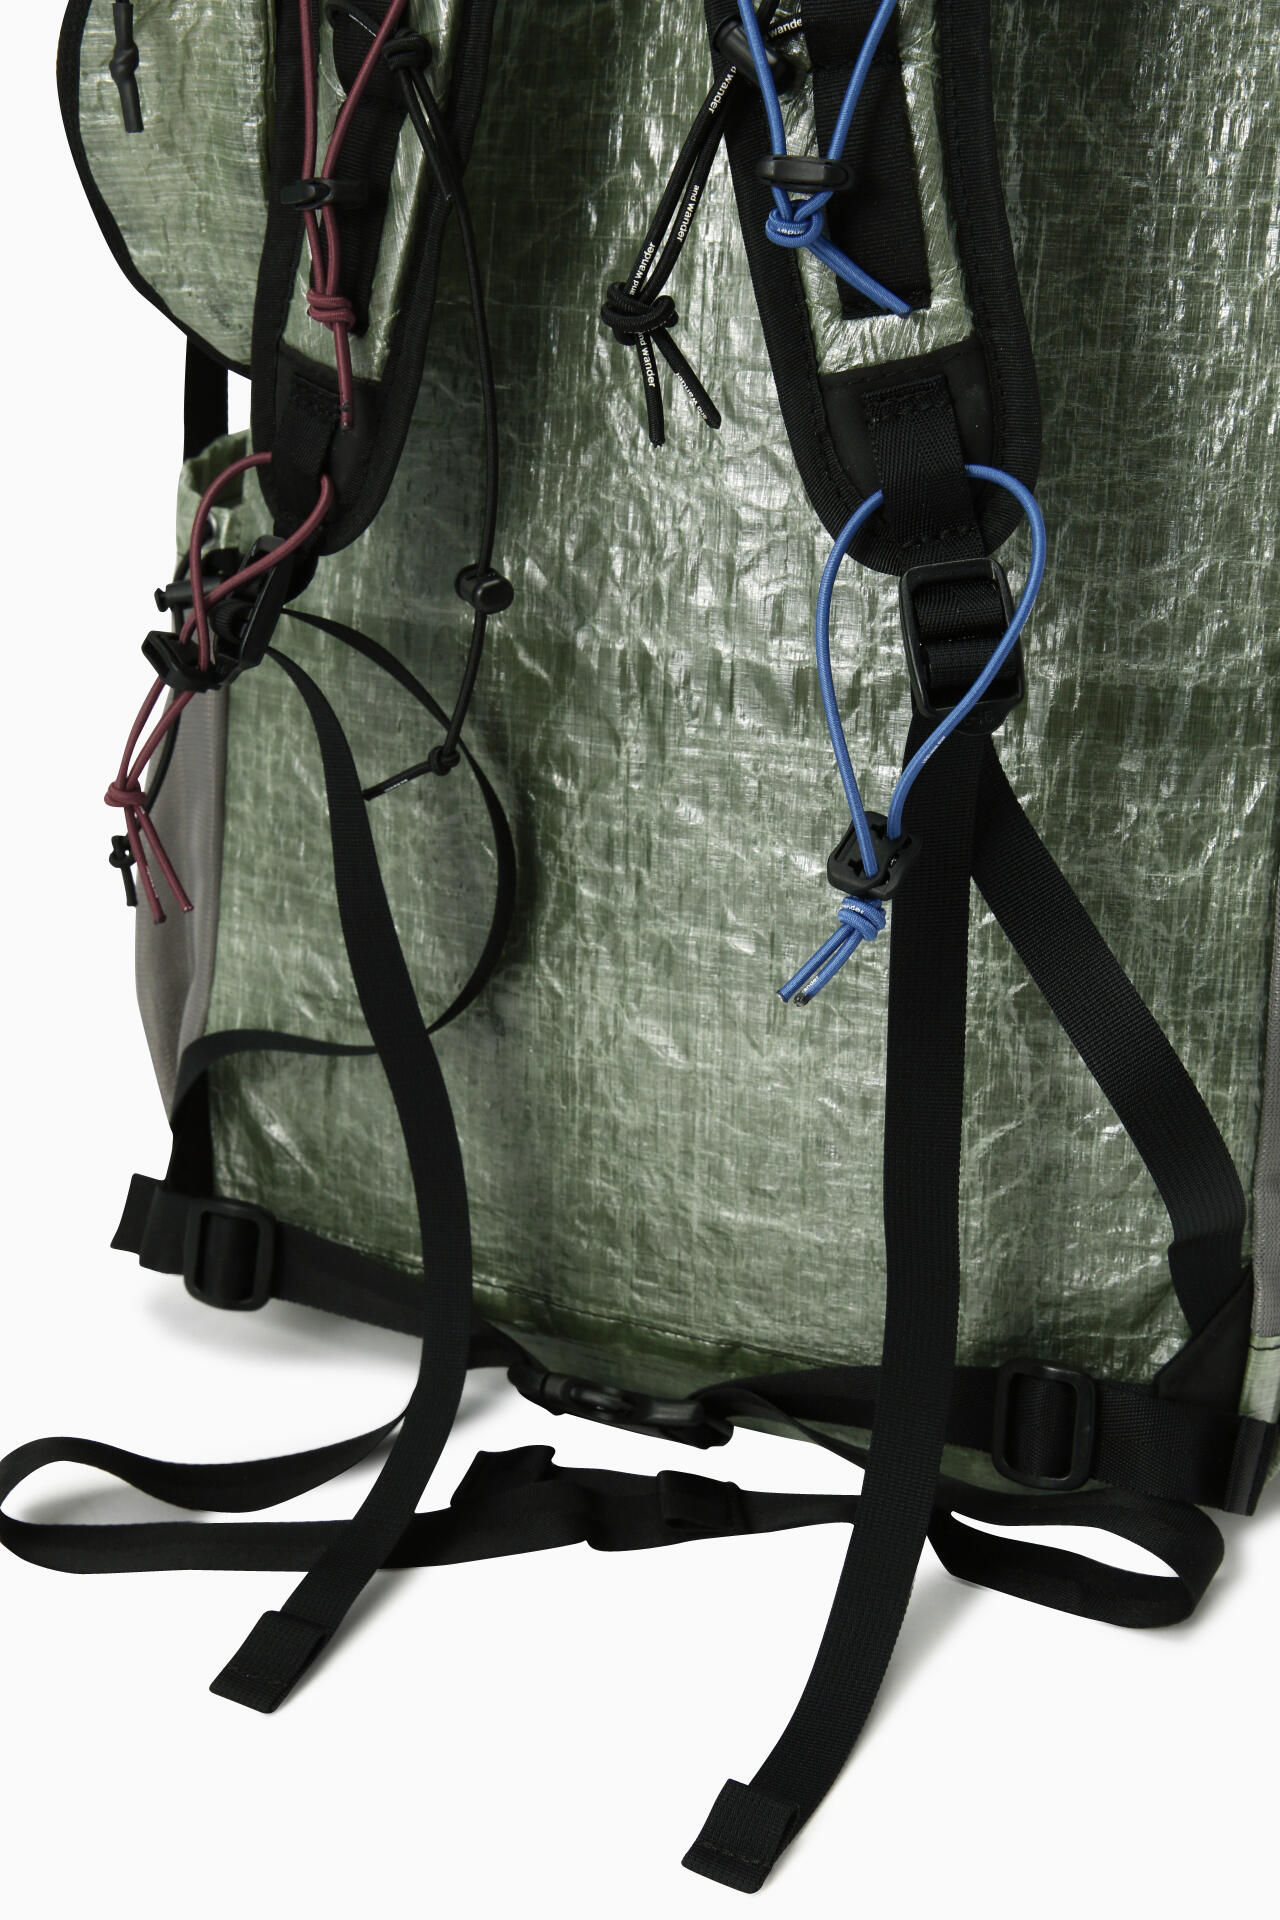 UL backpack with Dyneema(R)